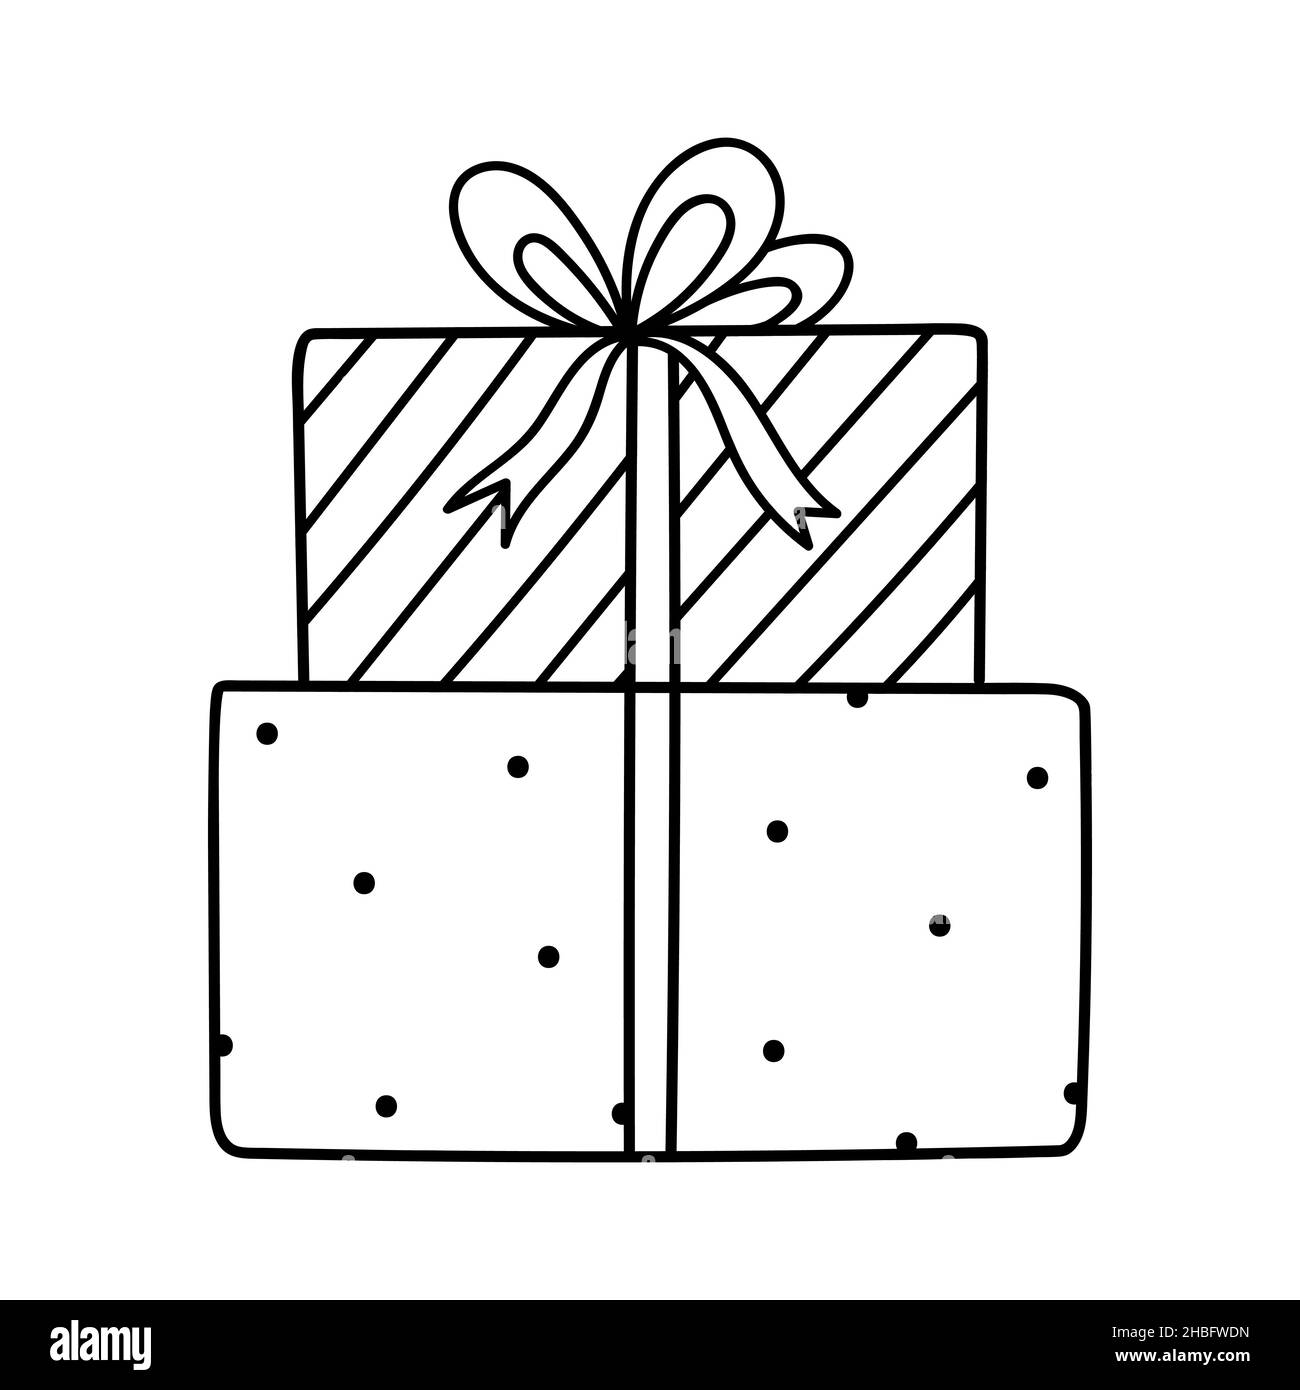 Christmas Gift Box Linear Doodle, Christmas Drawing, Ear Drawing